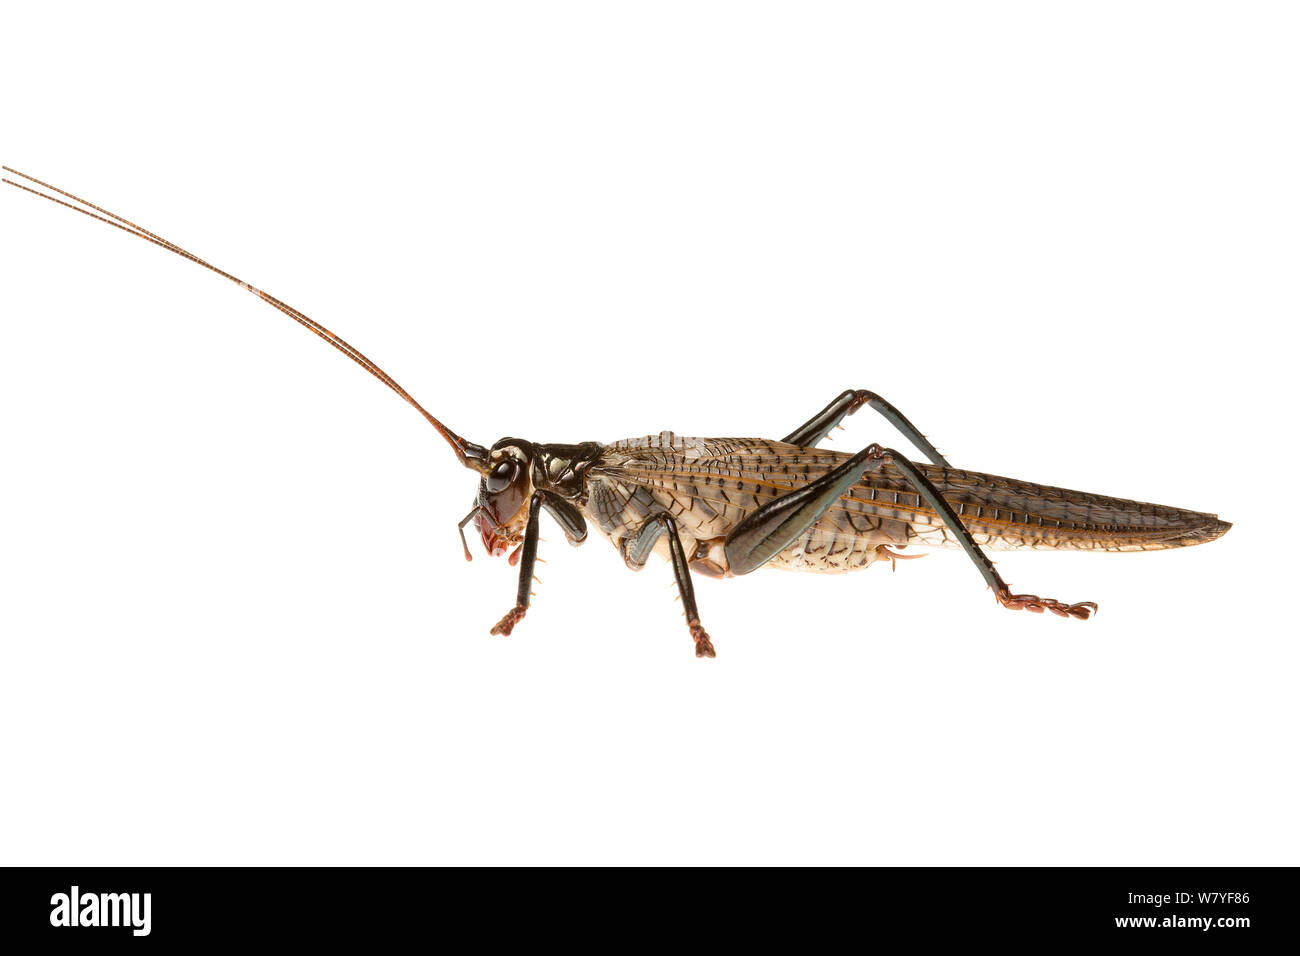 Black raspy cricket (Hadrogryllacris sp), Western Australia. meetyourneighbours.net project Stock Photo